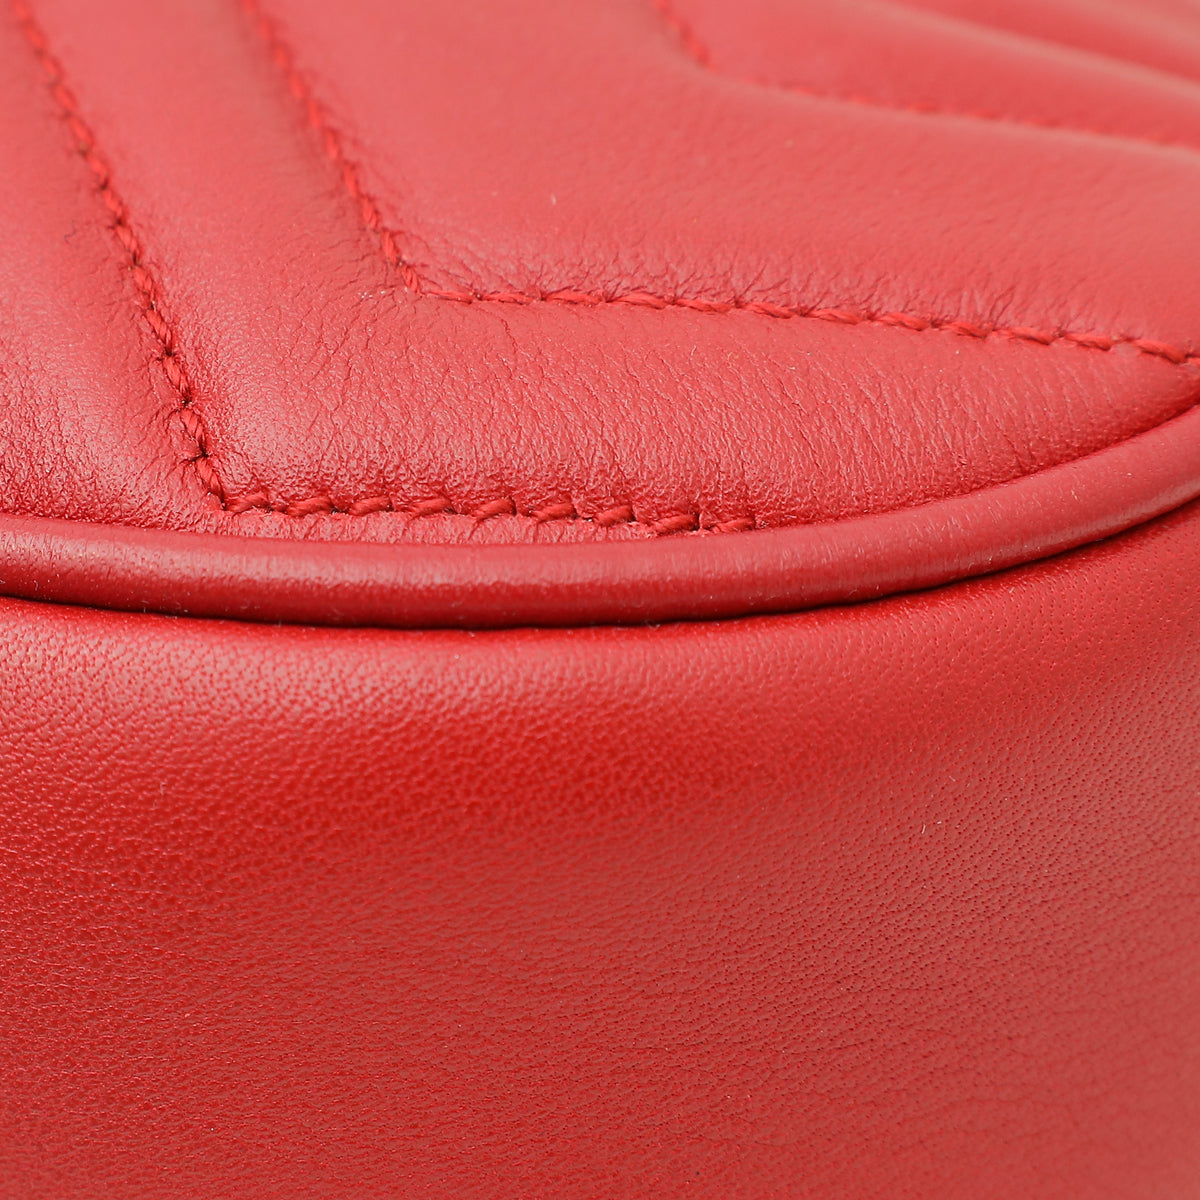 Gucci Red GG Marmont Mini Belt Bag